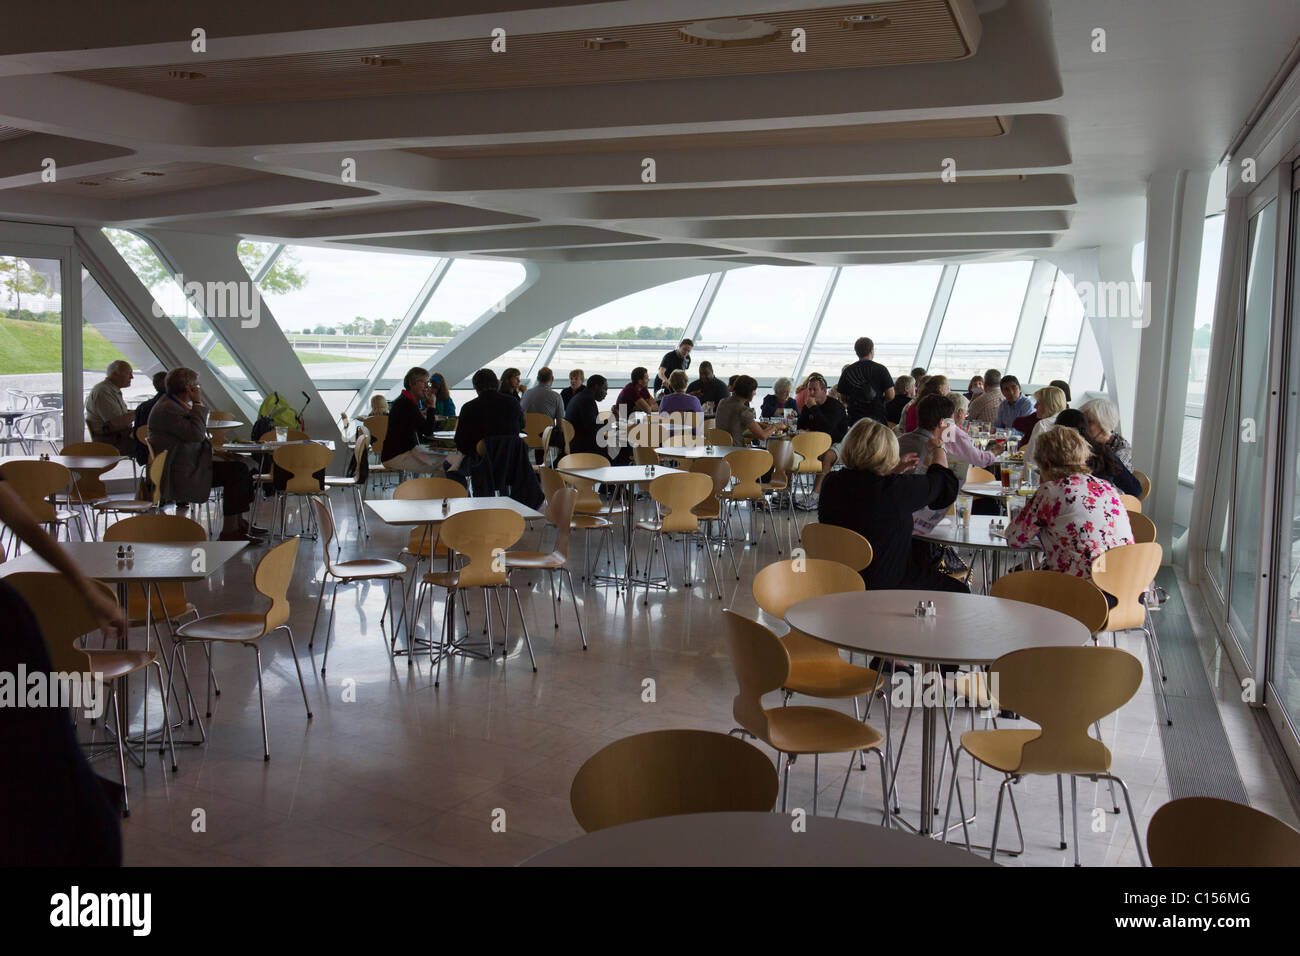 Café Calatrava, Quadracci Pavilion, progettato da Santiago Calatrava, Milwaukee Art Museum, Wisconsin, STATI UNITI D'AMERICA Foto Stock